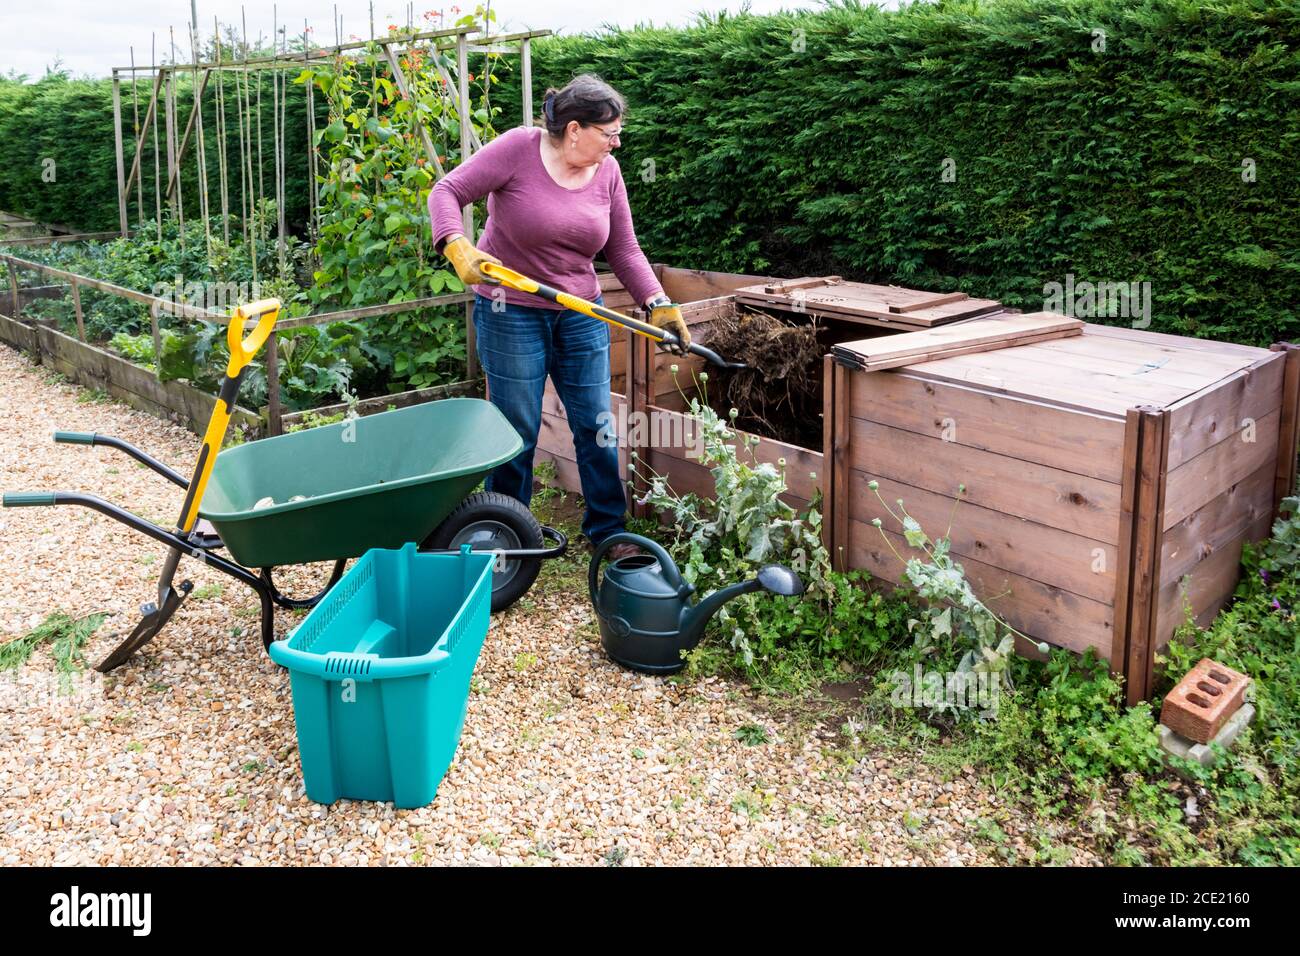 Woman working in garden moving compost between bins. Stock Photo